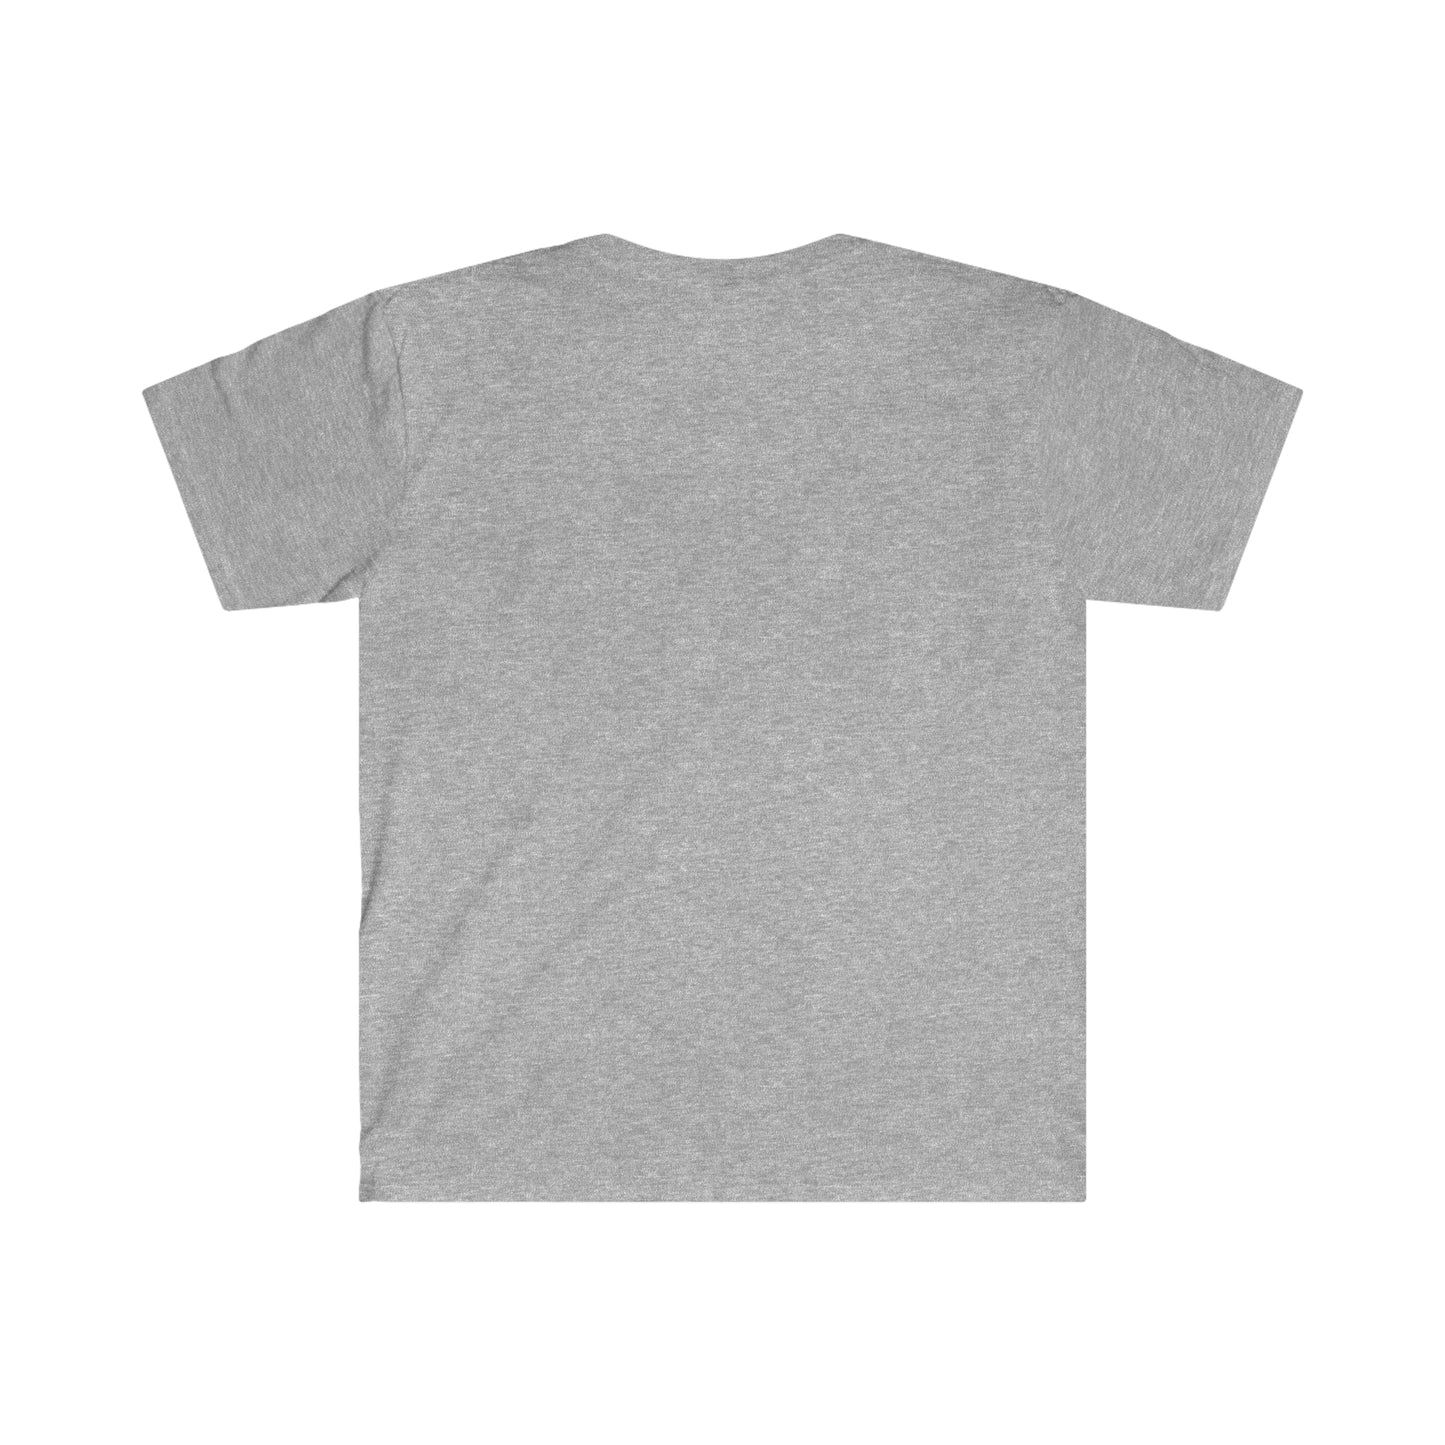 Jake n JOES Wingman Unisex Softstyle T-Shirt